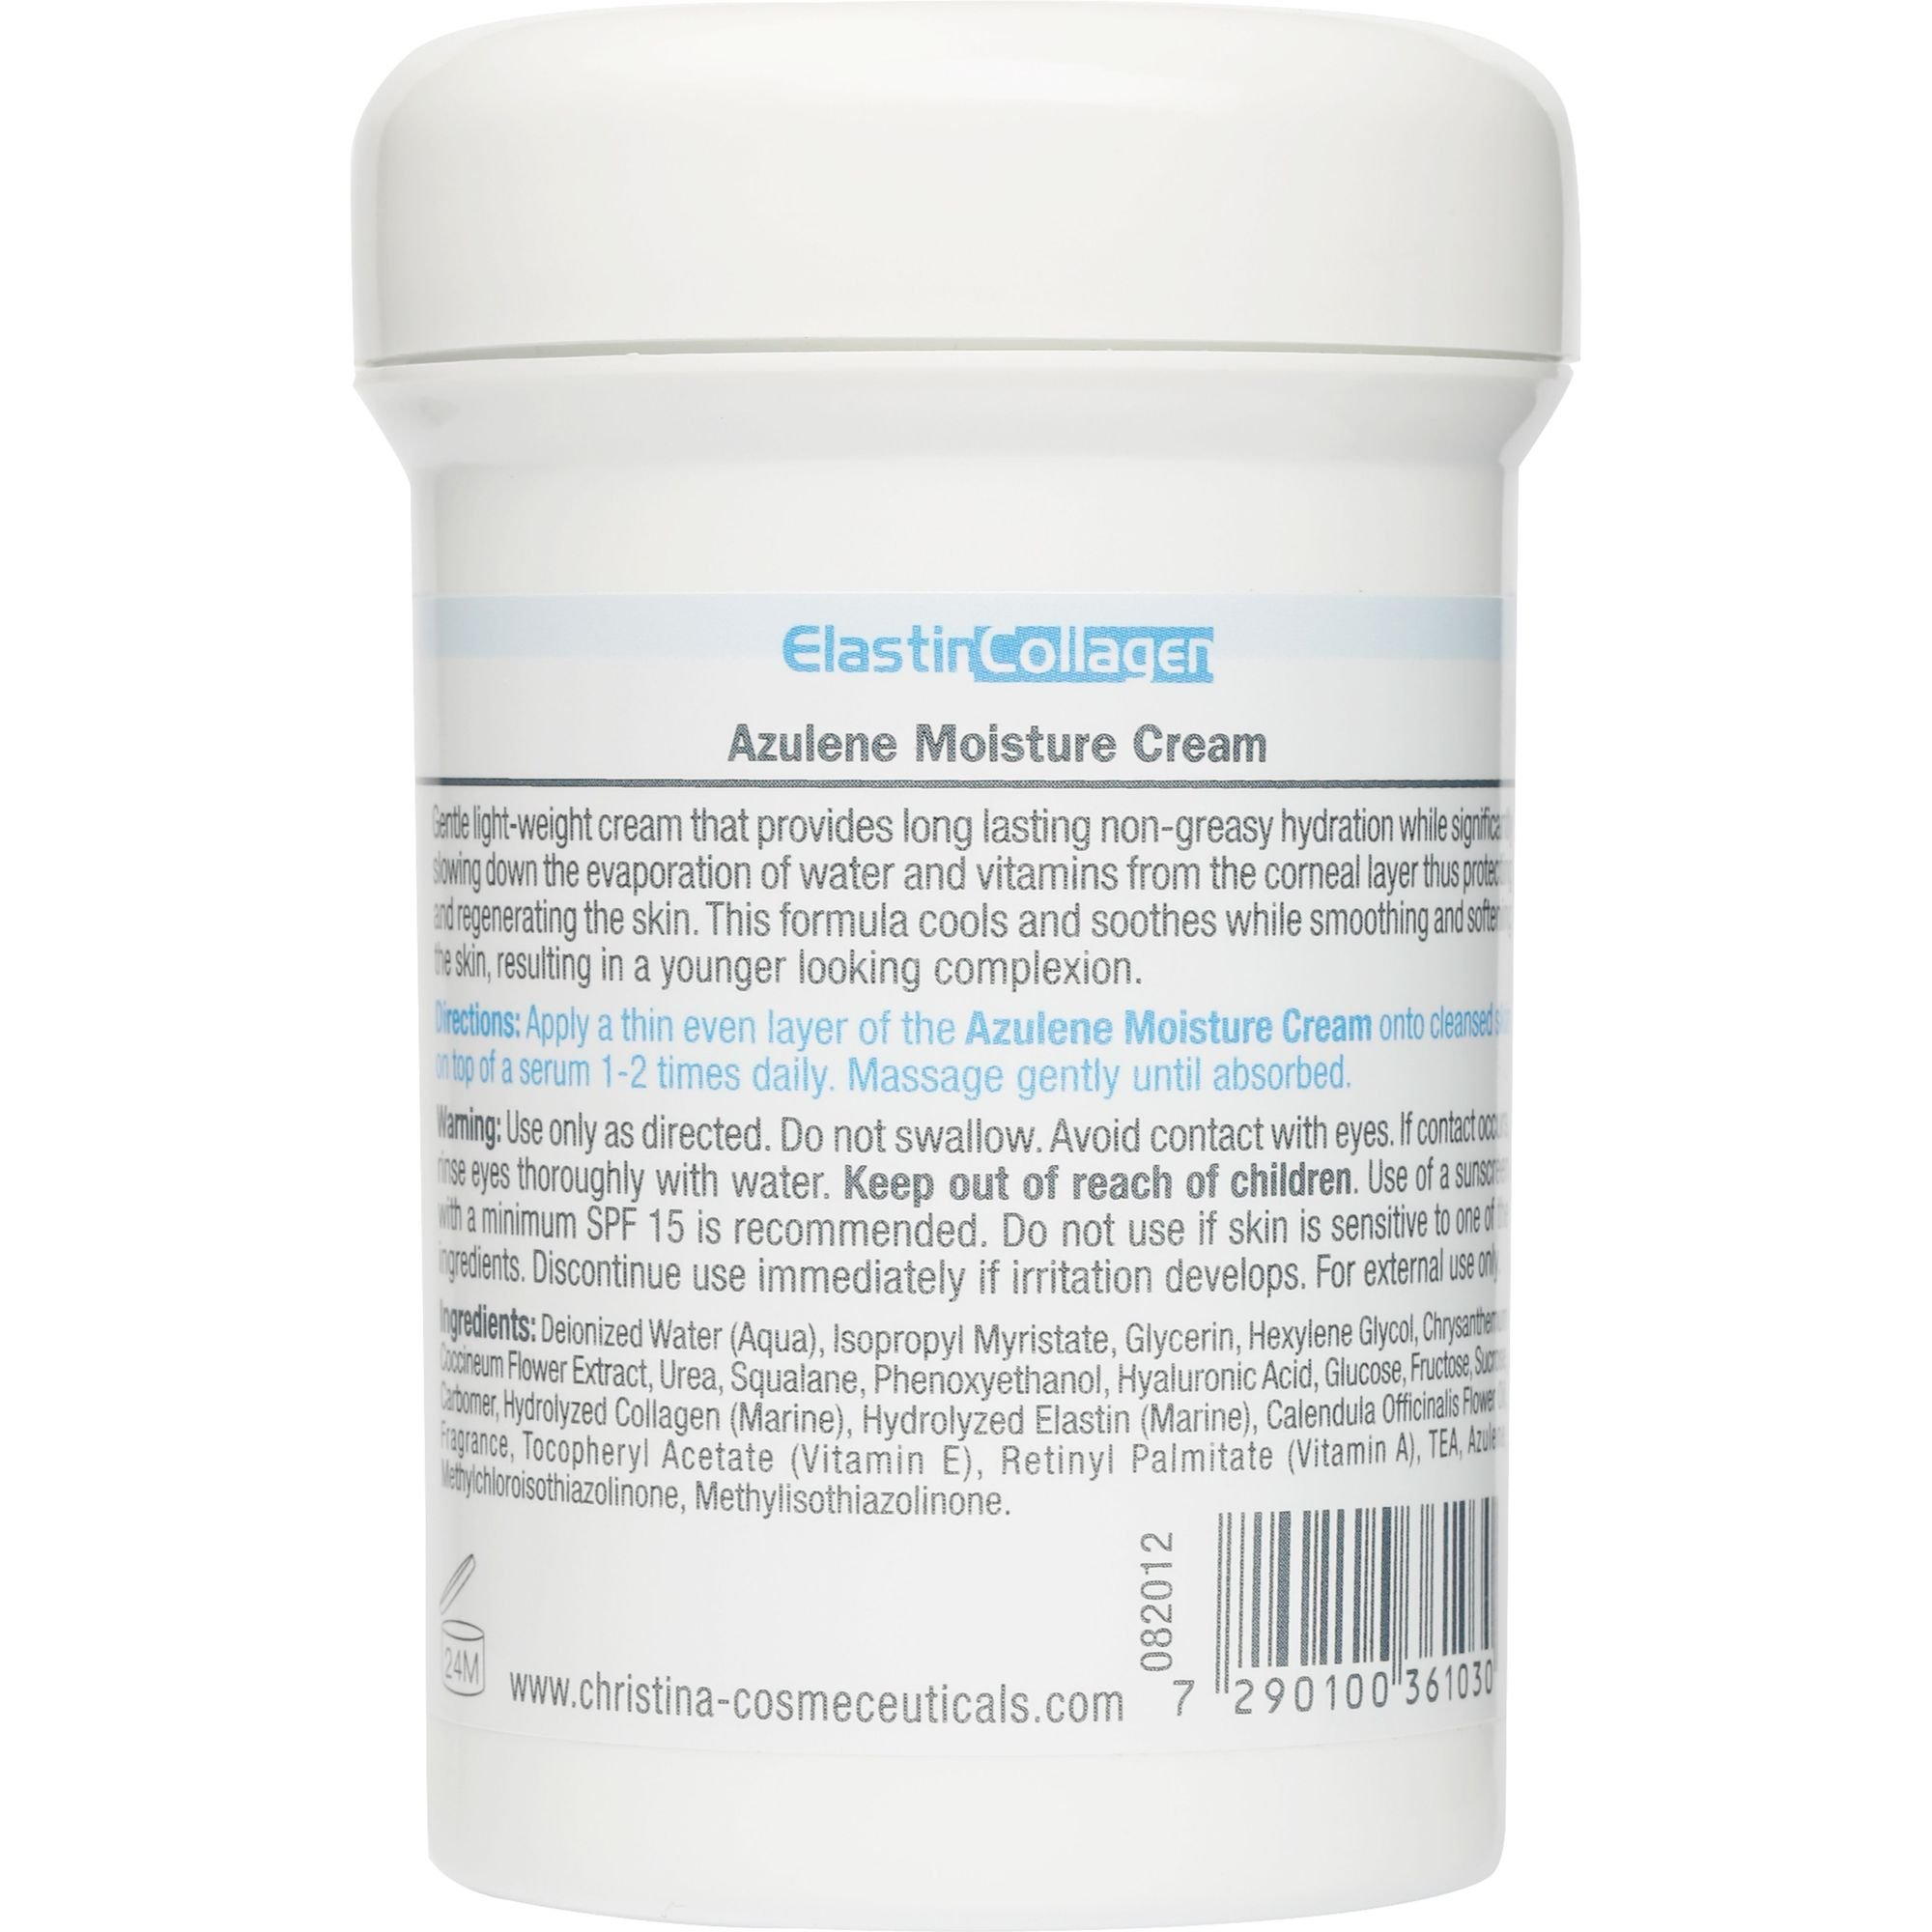 Зволожувальний крем для нормальної шкіри Christina Elastin Collagen Azulene Moisture Cream with Vitamins A, E & HA 250 мл - фото 2